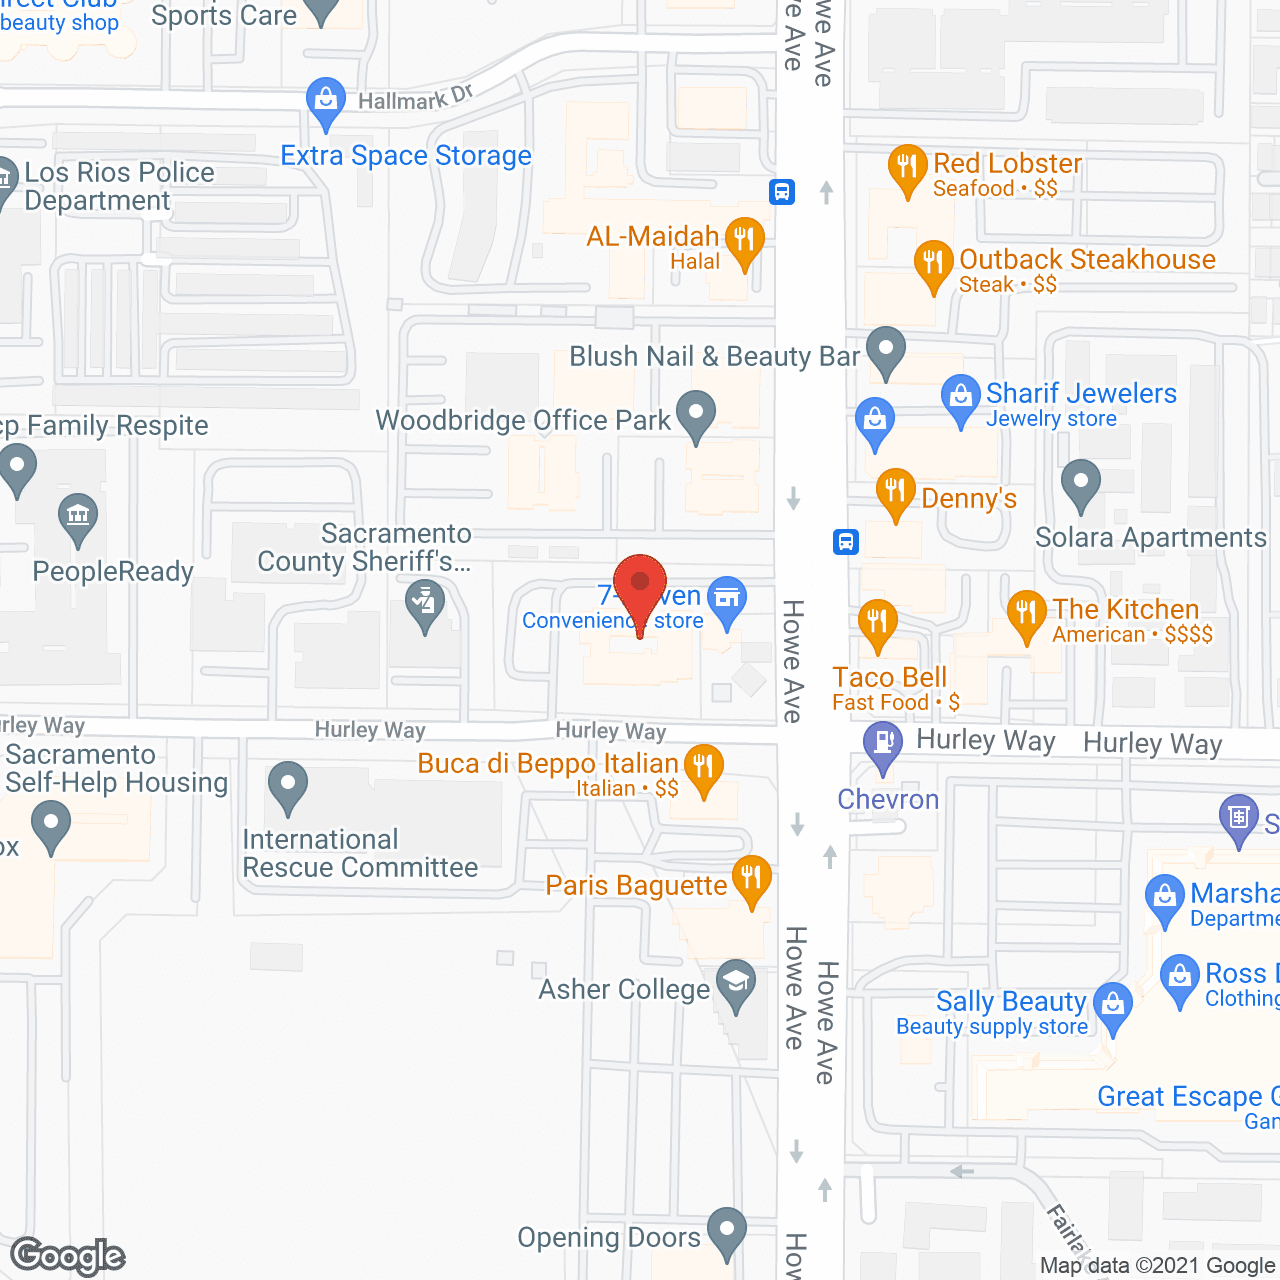 AccentCare of Sacramento, CA in google map